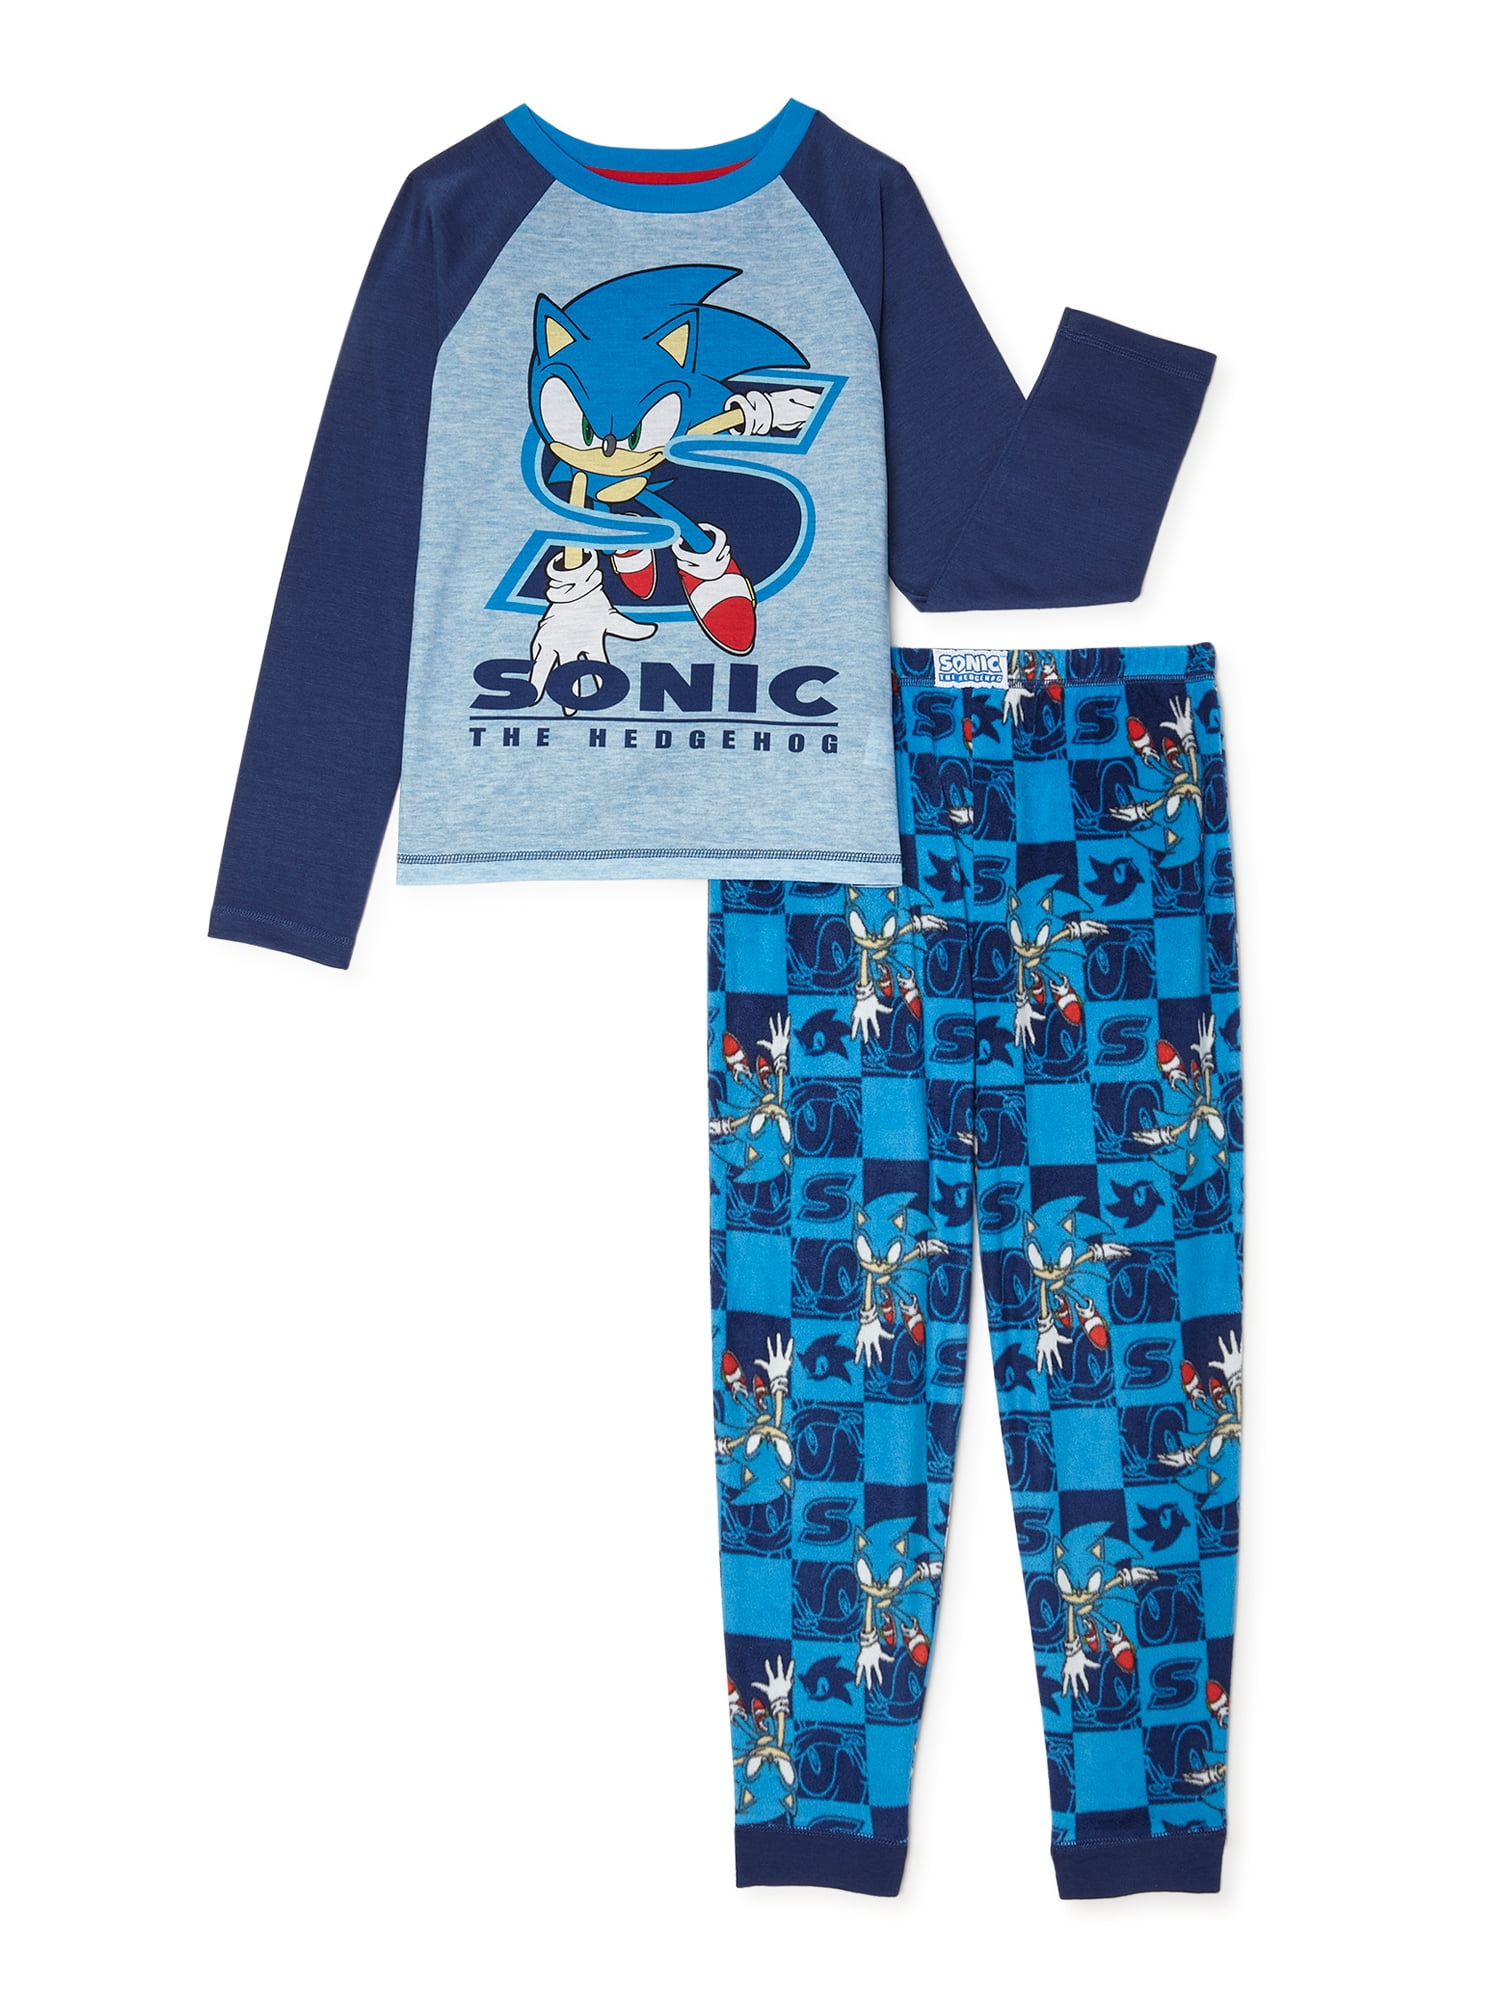 Sonic The Hedgehog Pajamas Boys Set Long Sleeve Shirt Pants Size 4-12 Winter NEW 